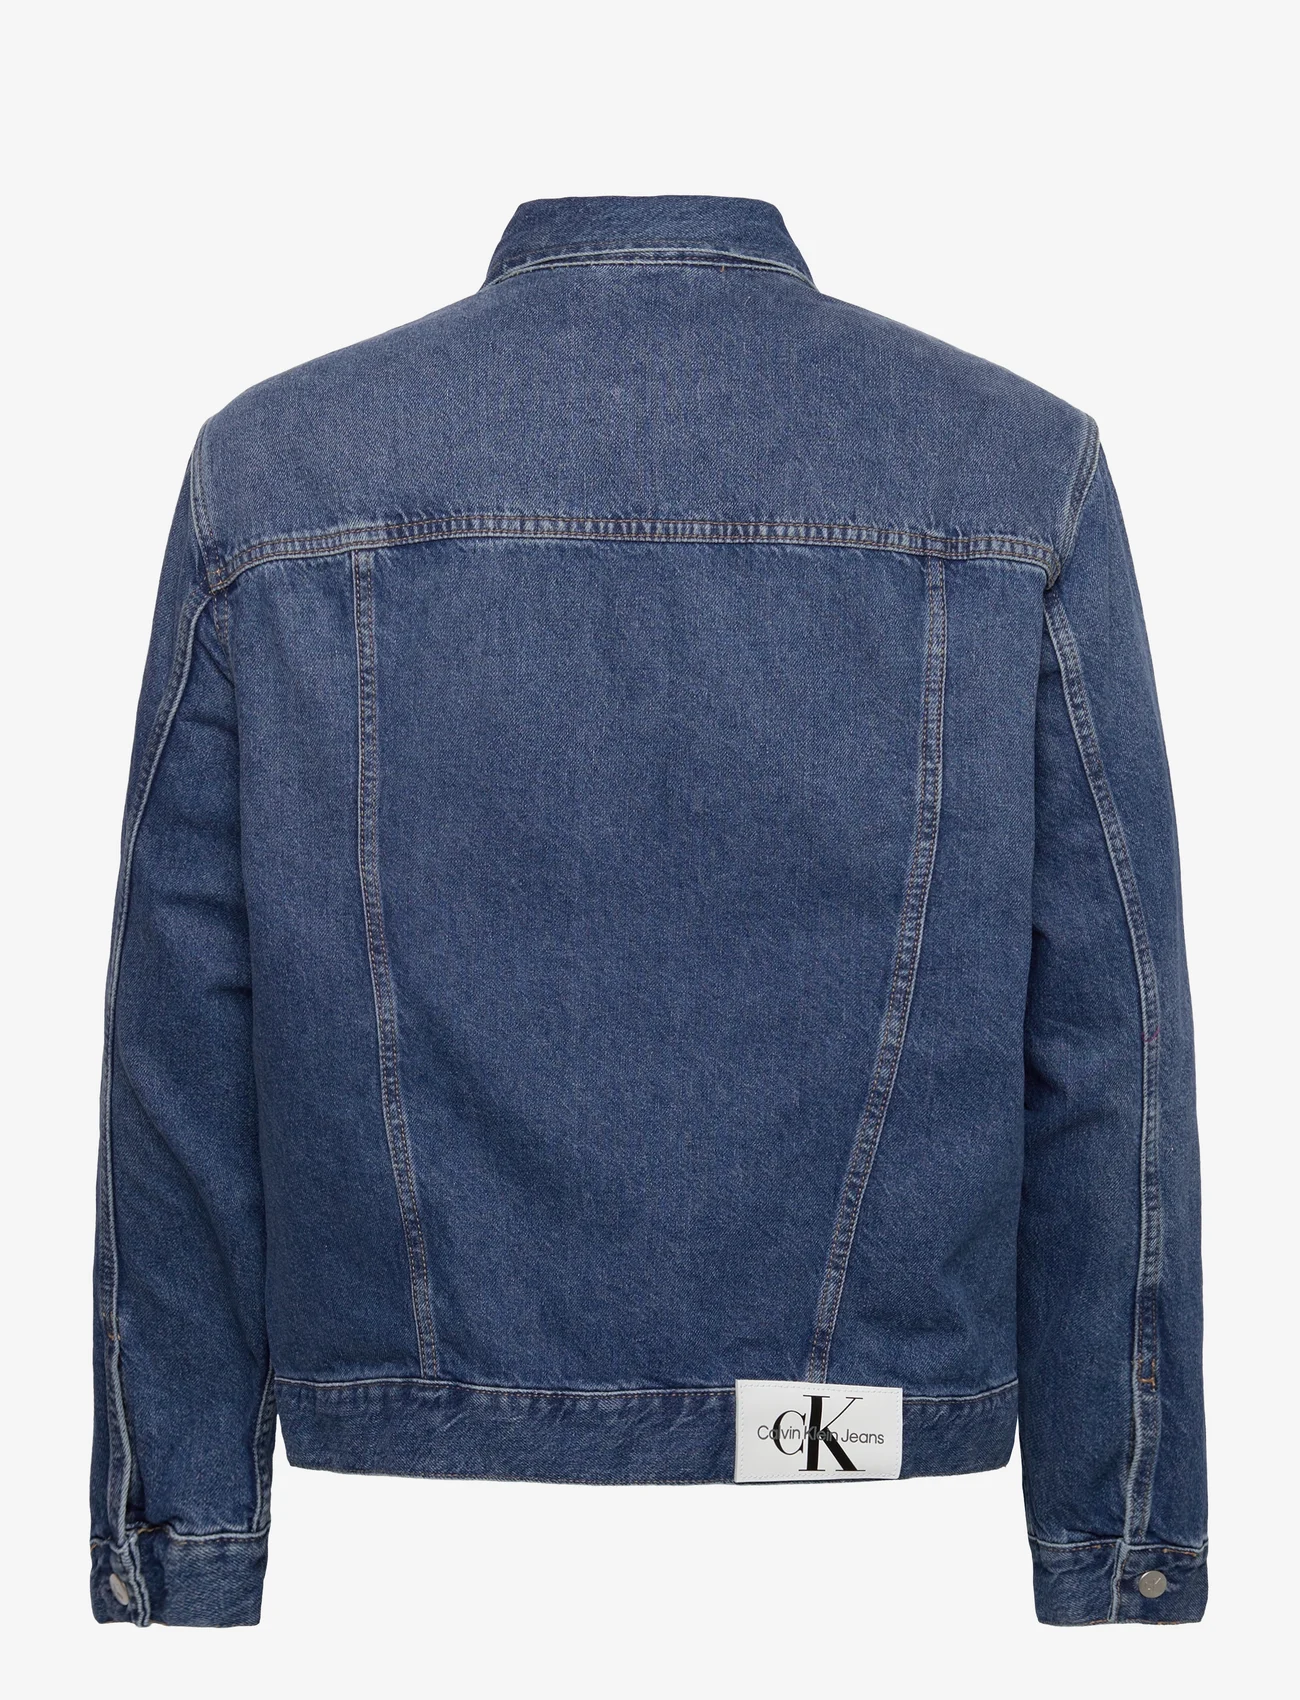 Calvin Klein Jeans - REGULAR 90S DENIM JACKET - pavasarinės striukės - denim medium - 1